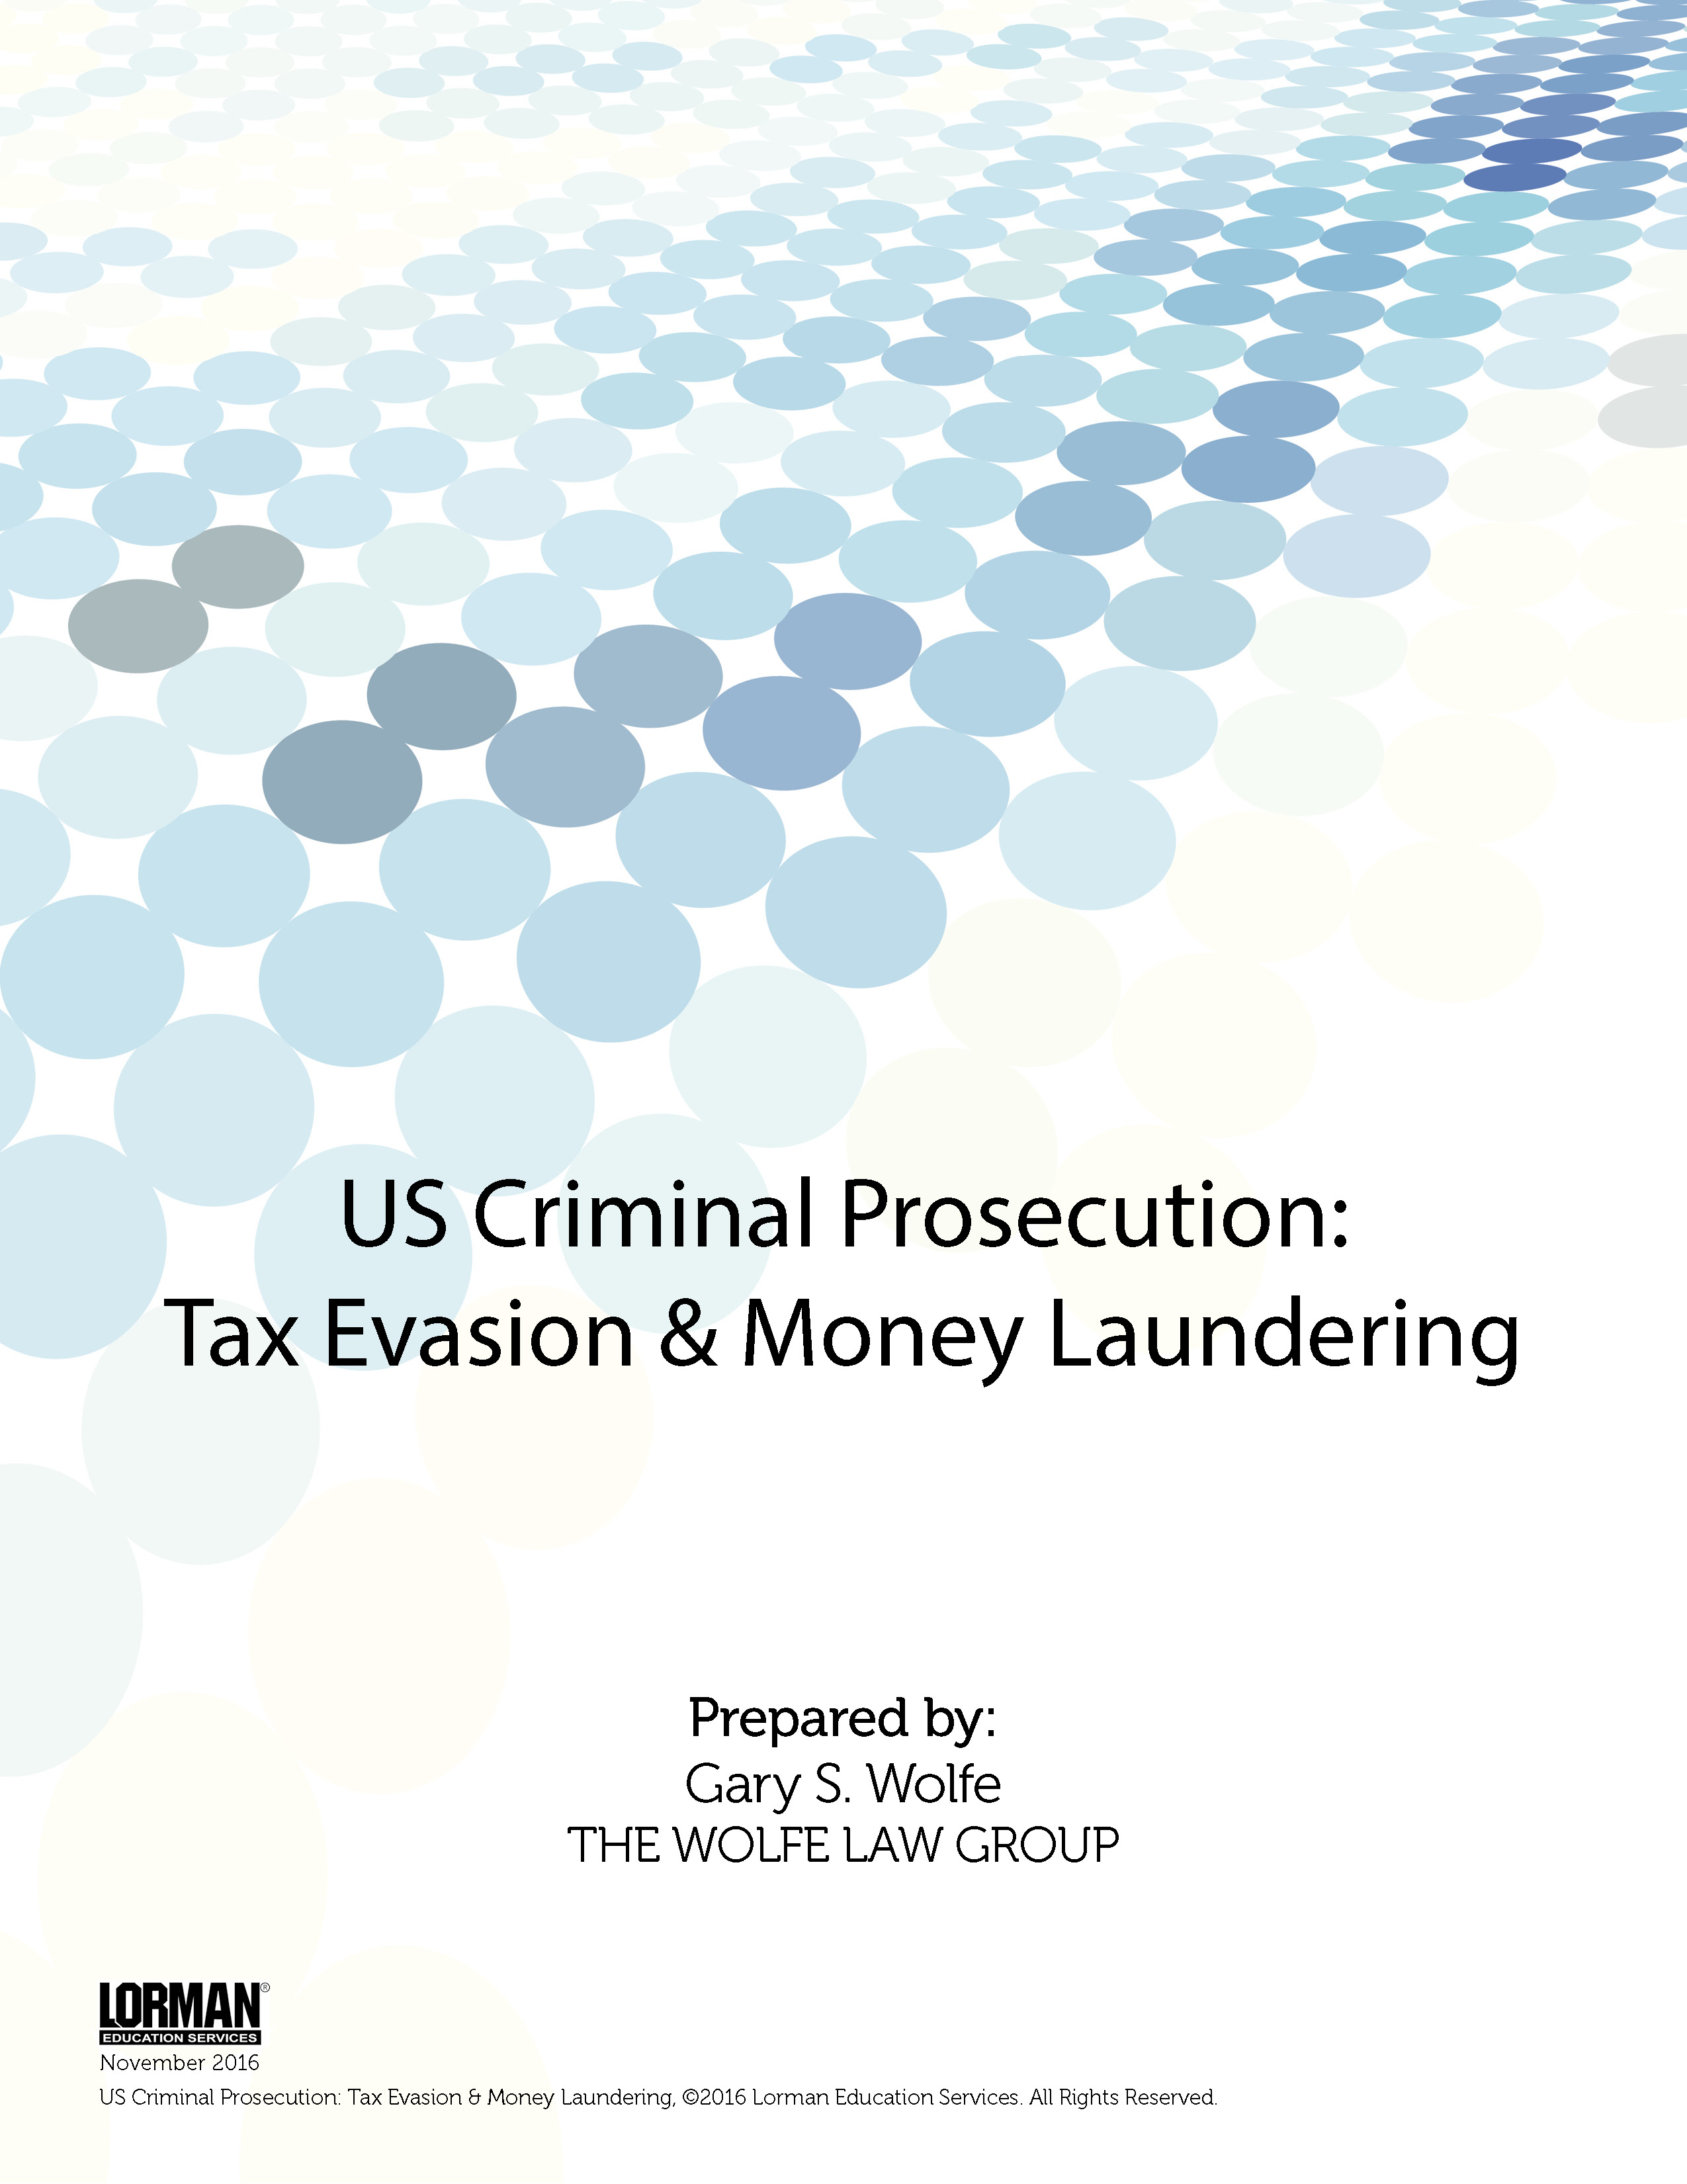 US Criminal Prosecution - Tax Evasion and Money Laundering